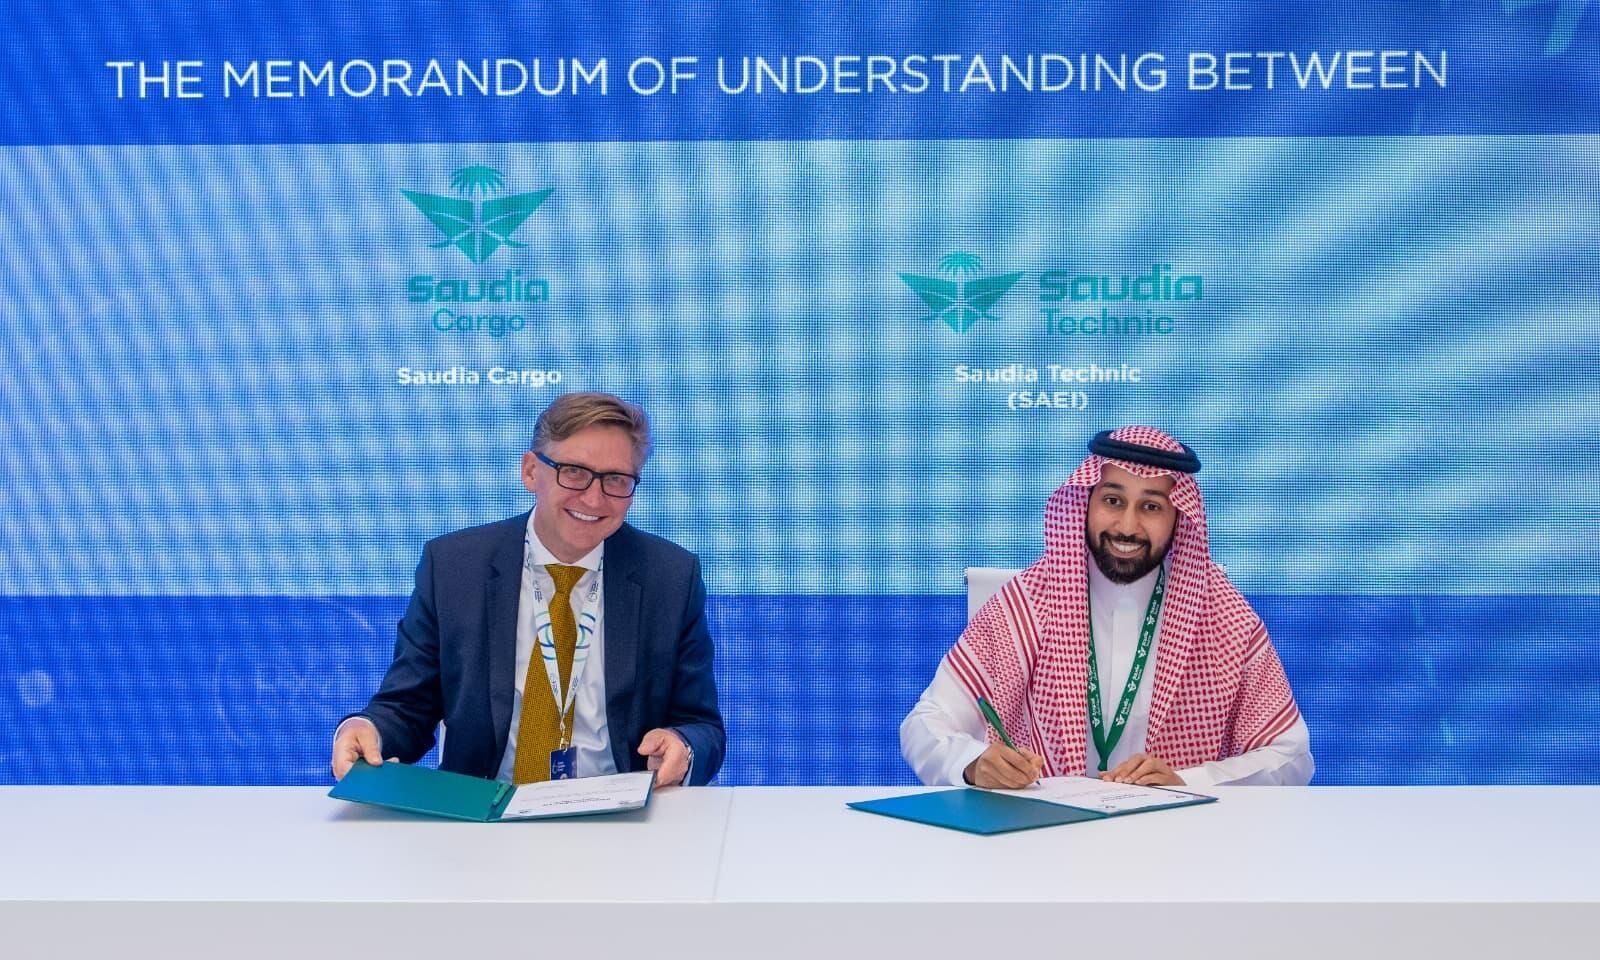 Saudia Cargo to form new headquarters at Saudia Technic MRO Village